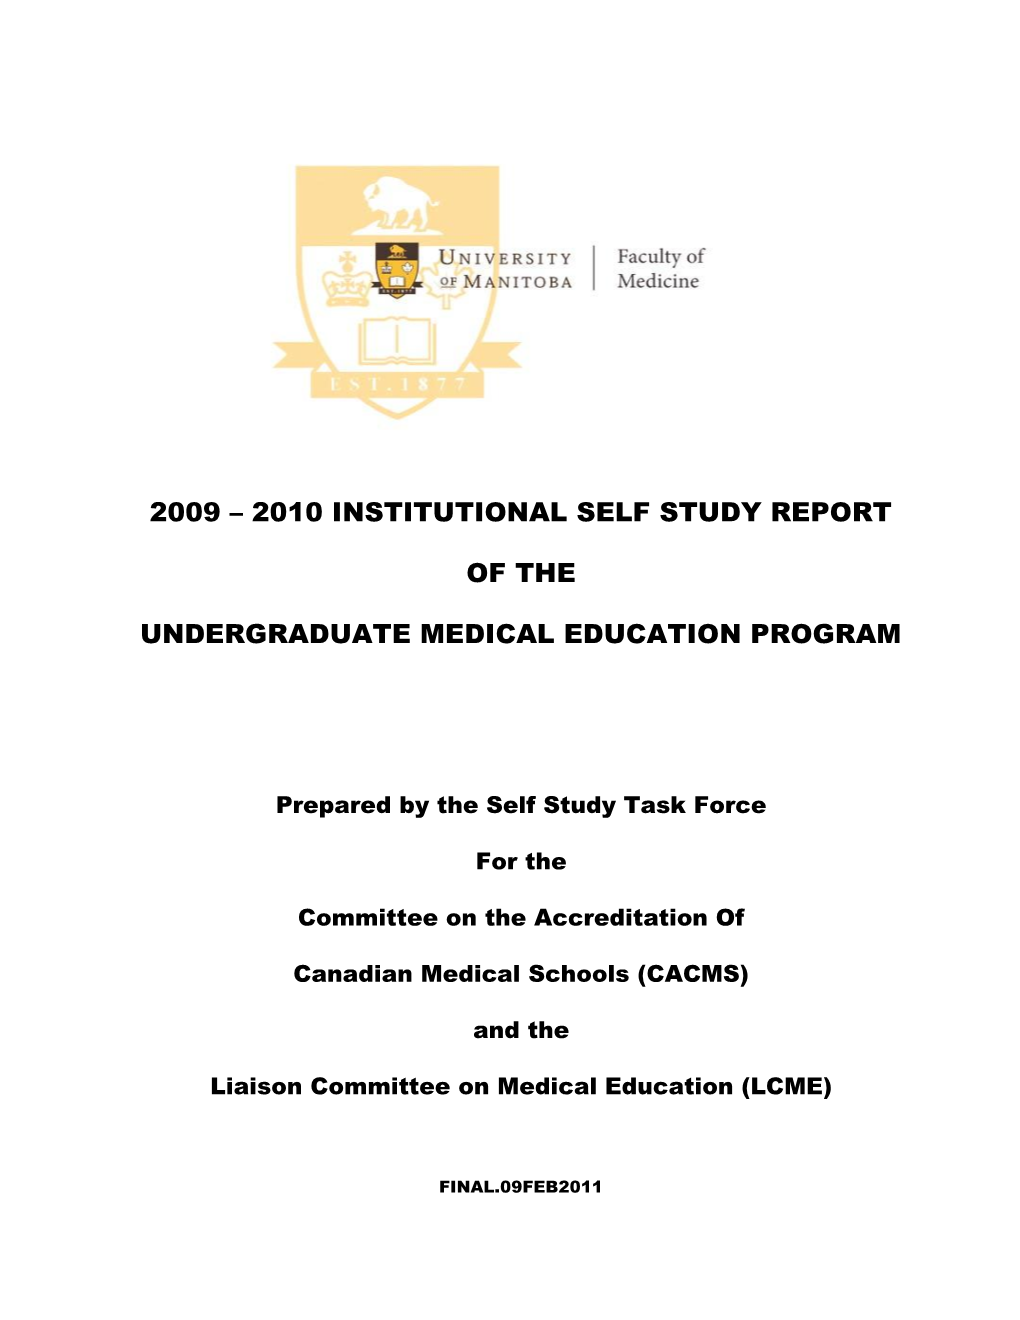 2009 – 2010 Institutional Self Study Report of the Undergraduate Medical